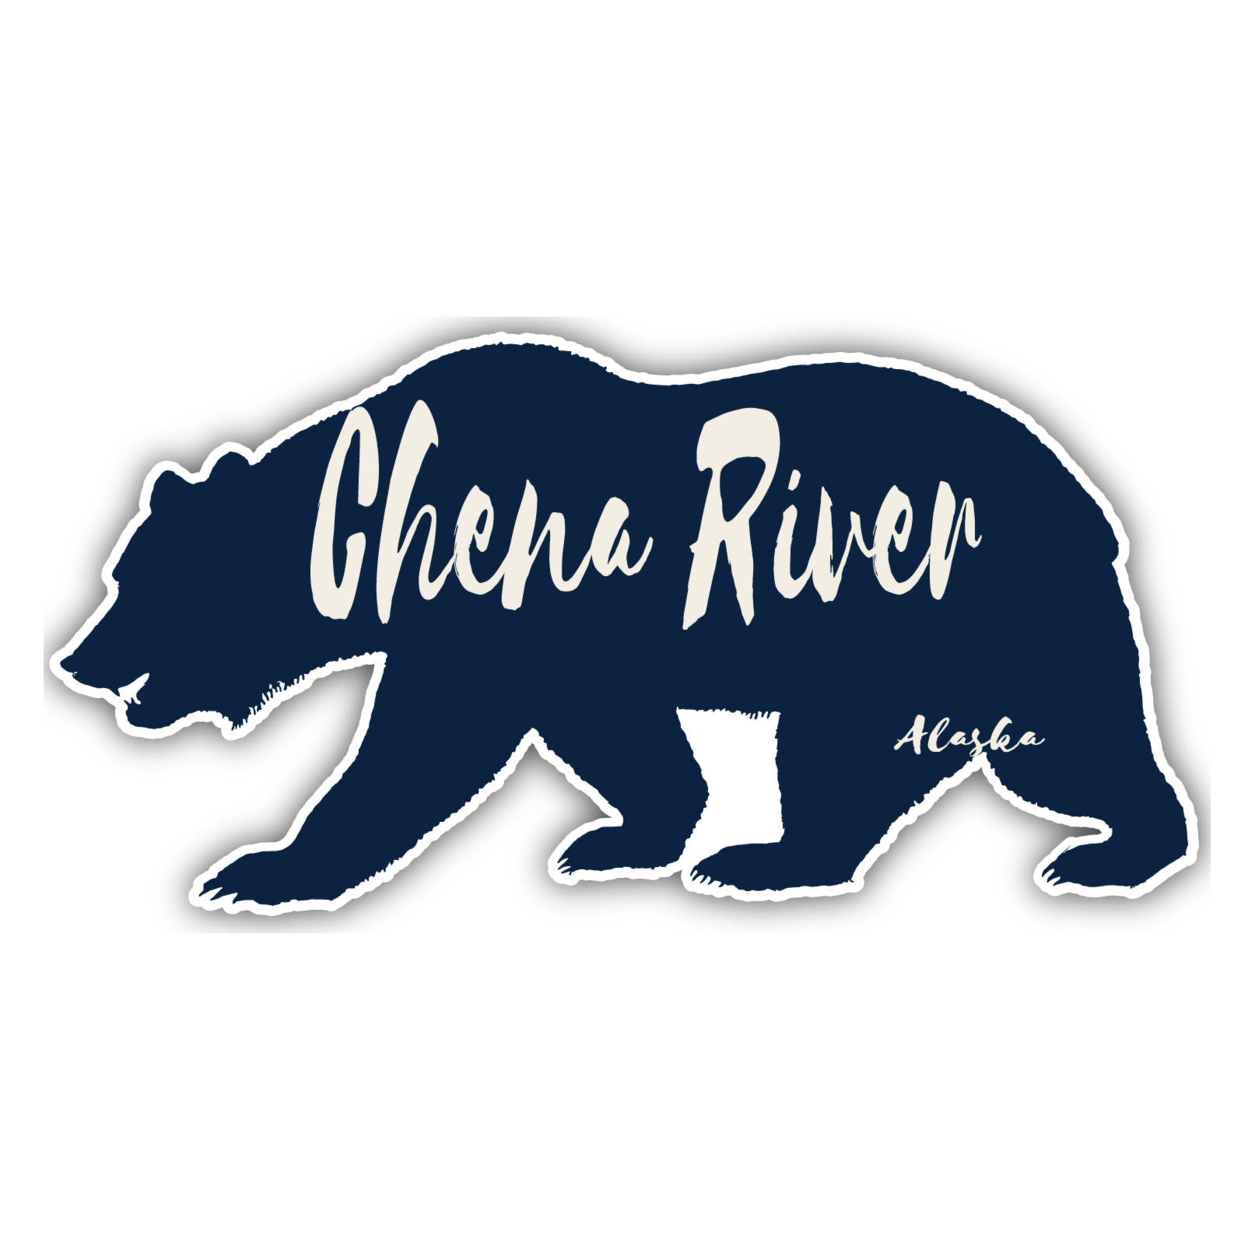 Chena River Alaska Souvenir Decorative Stickers (Choose Theme And Size) - 4-Pack, 4-Inch, Bear